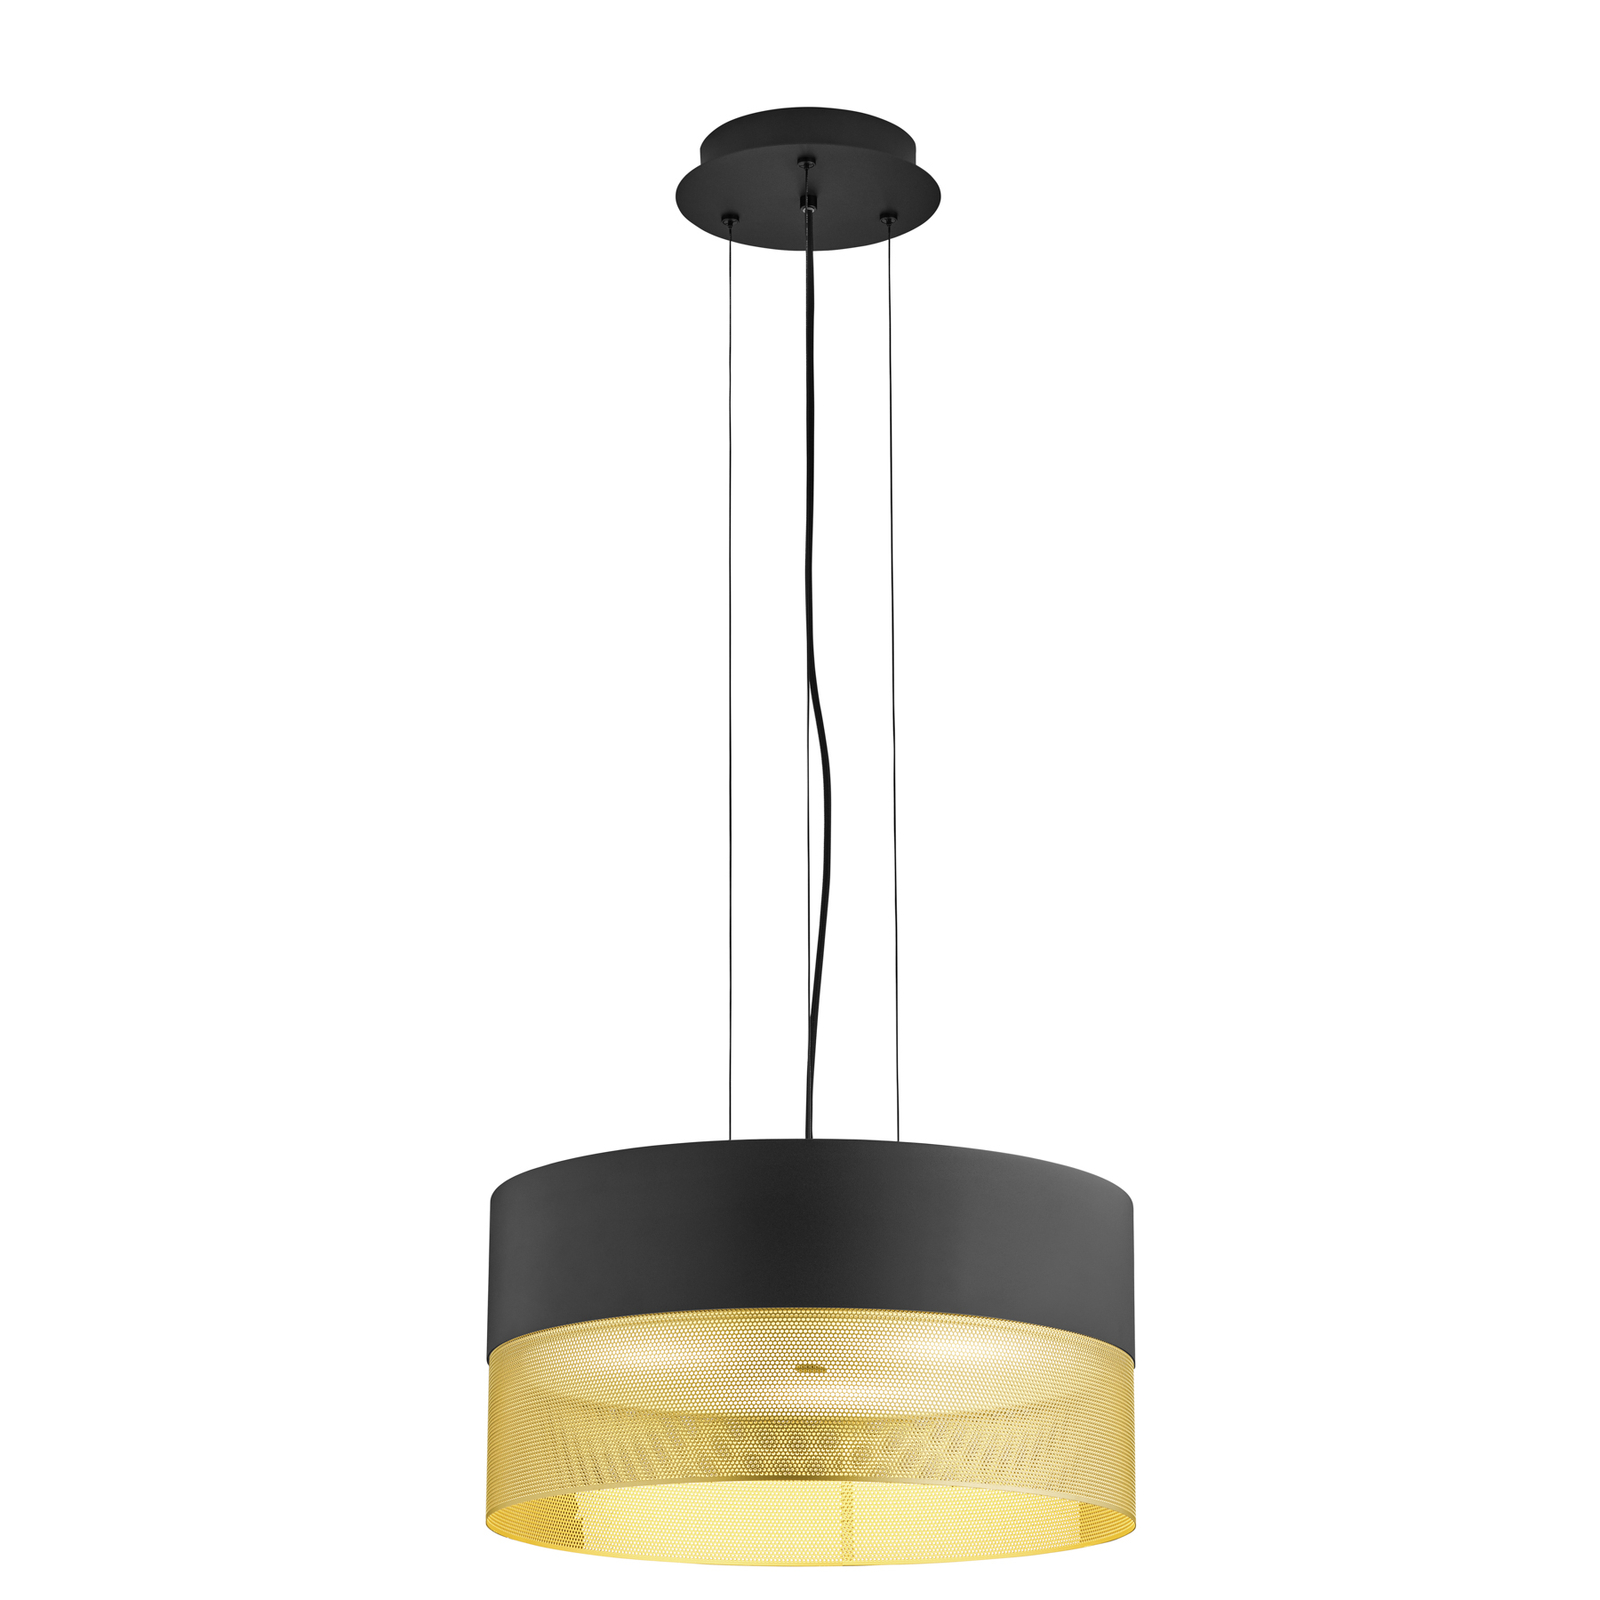 Hanglamp Mesh E27 Ø 50 cm, zwart/goud